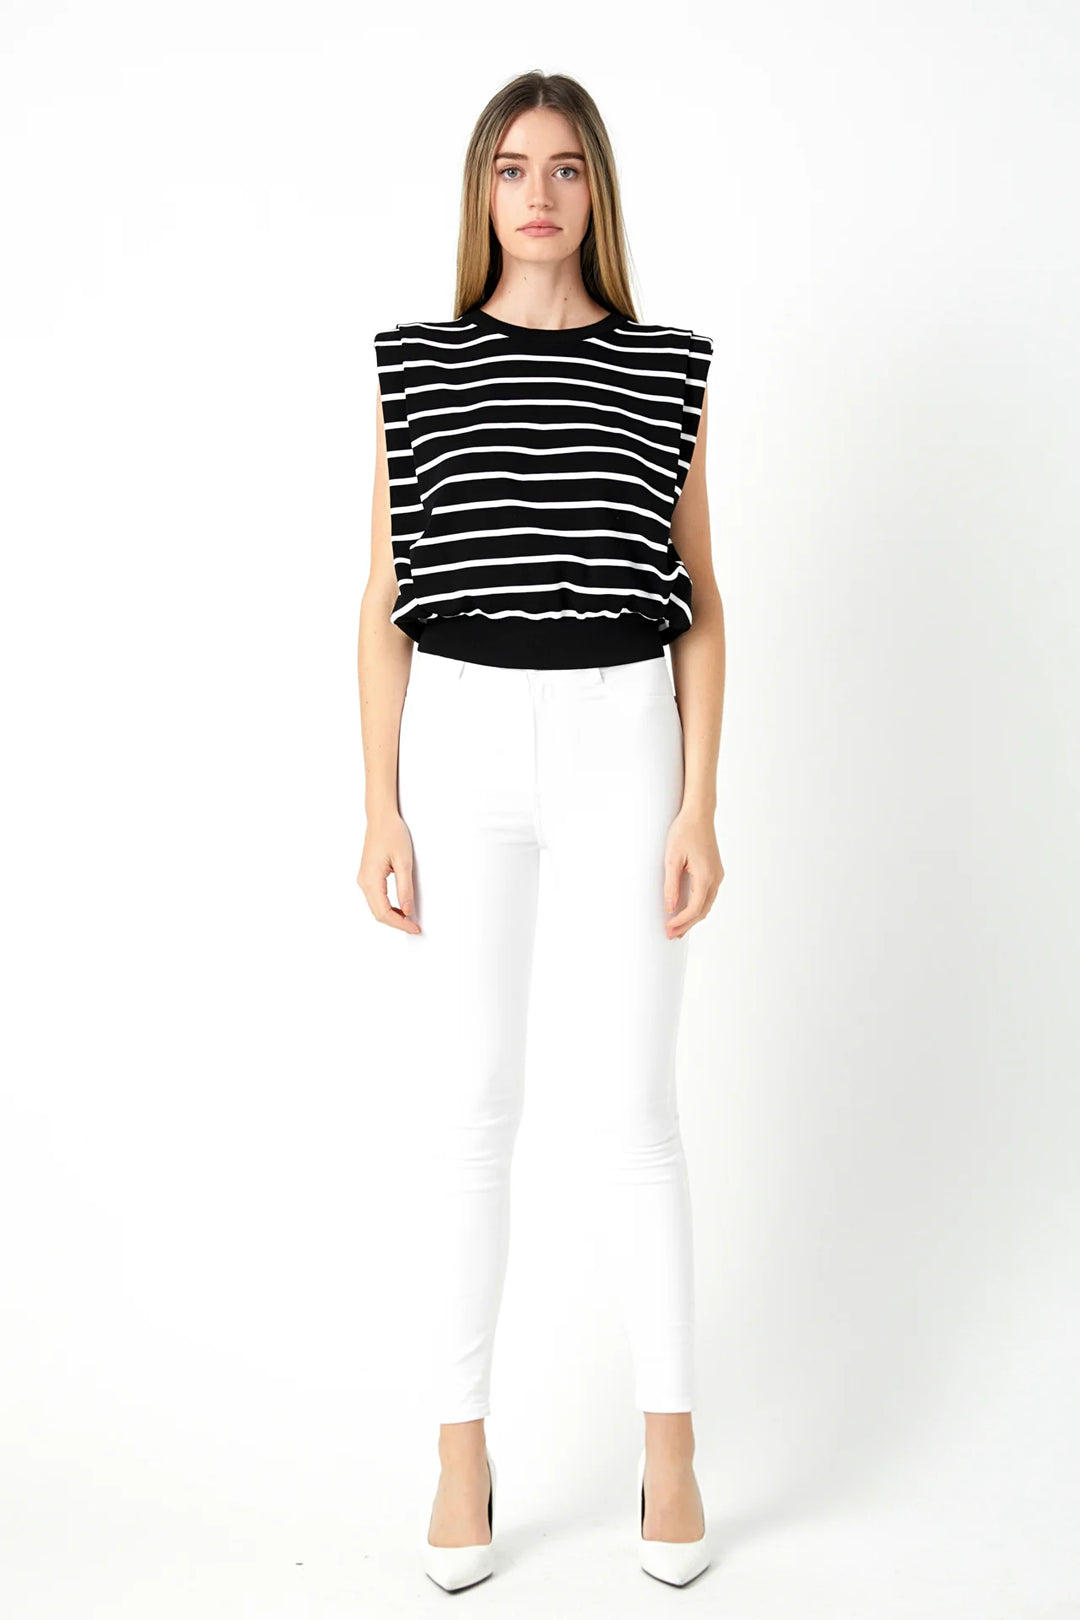 Stripe Sleeveless Pleated Knit Top-Black/White